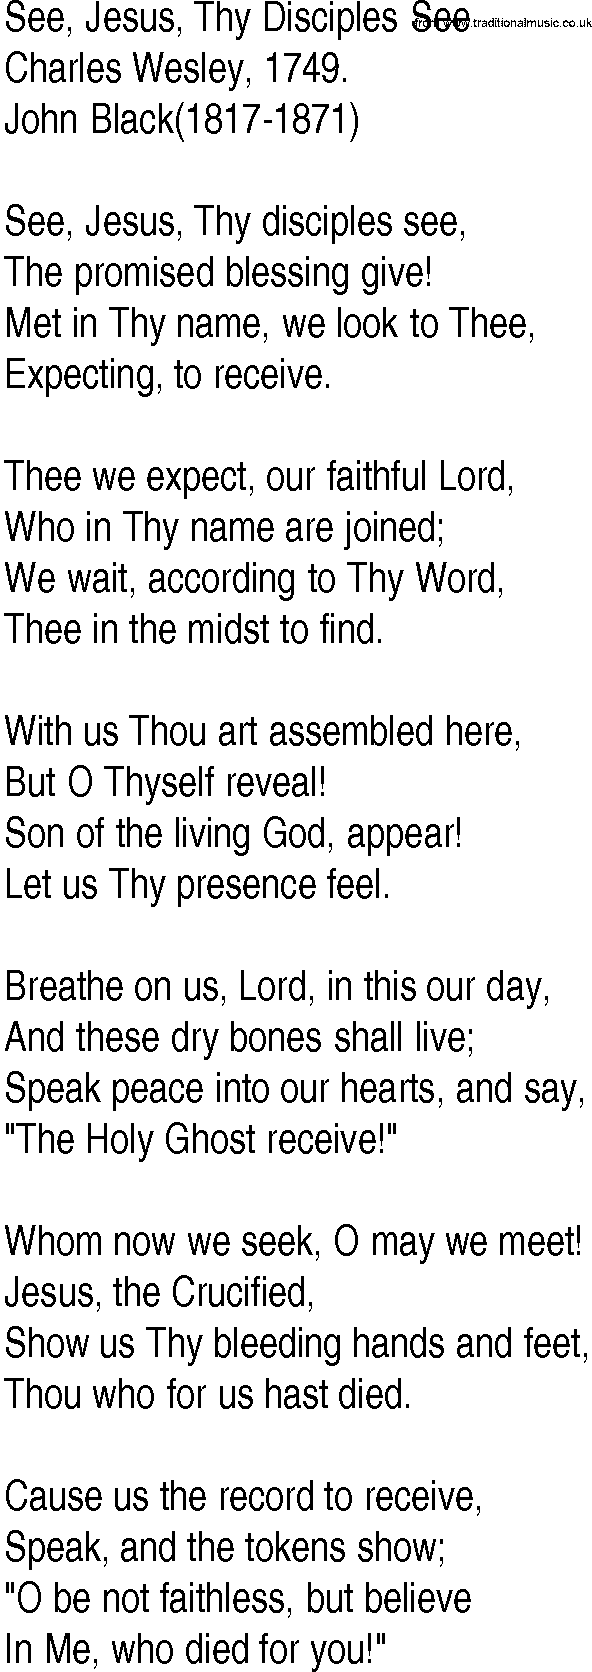 Hymn and Gospel Song: See, Jesus, Thy Disciples See by Charles Wesley lyrics